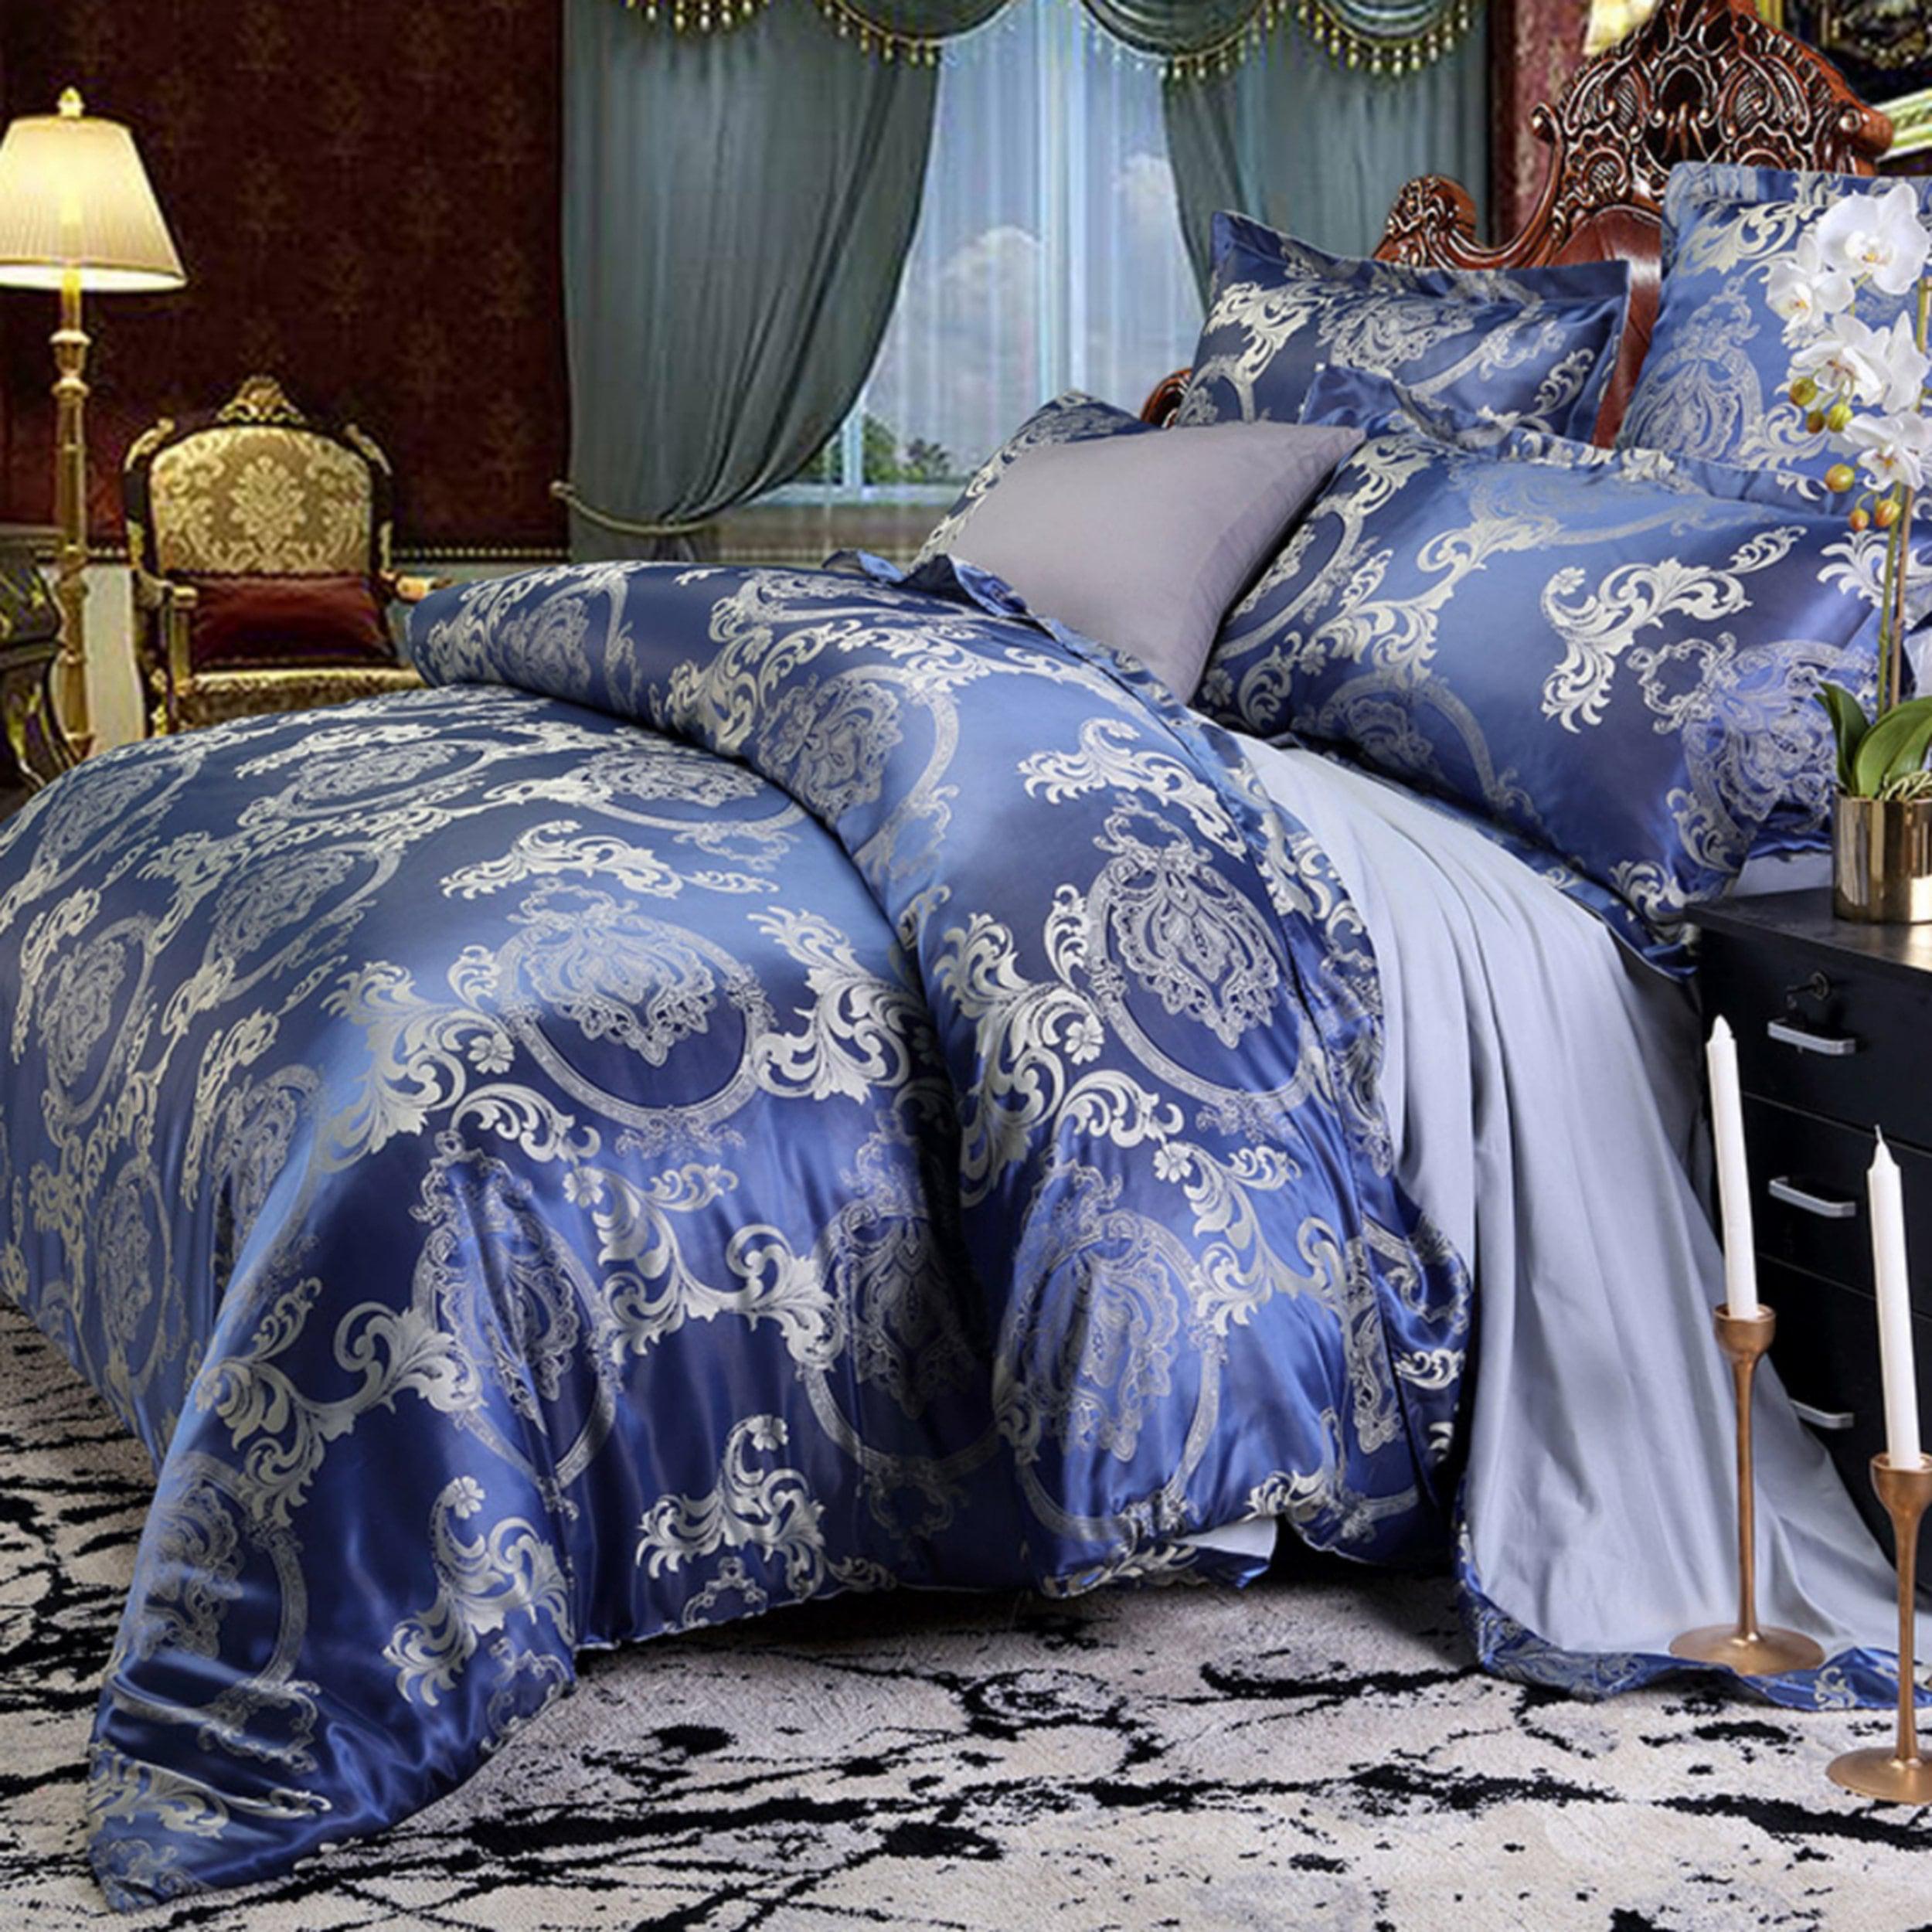 https://cdn.shopify.com/s/files/1/0535/2007/2857/files/daintyduvet-luxury-blue-duvet-cover-set-jacquard-fabric-aesthetic-bedding-decorative-embroidered-bedding-set-1_7763d940-5061-4faa-8d45-da8ae2f2b0b4.jpg?v=1692023257&width=2500